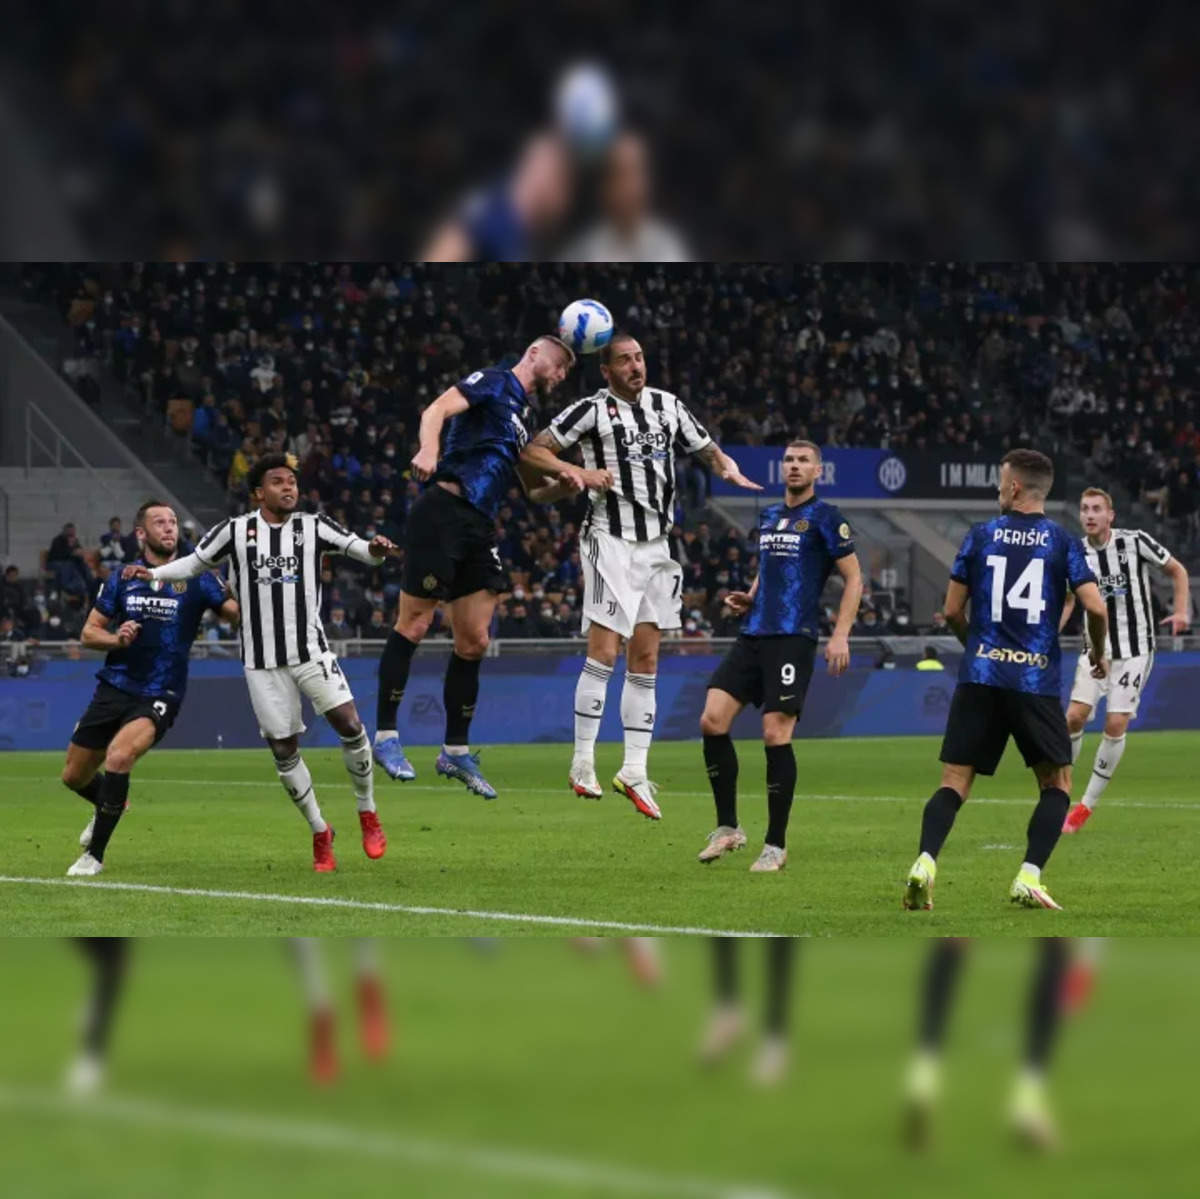 inter milan vs juventus Juventus vs Inter Milan Serie A live streaming Prediction, team news, where to watch Derby dItalia